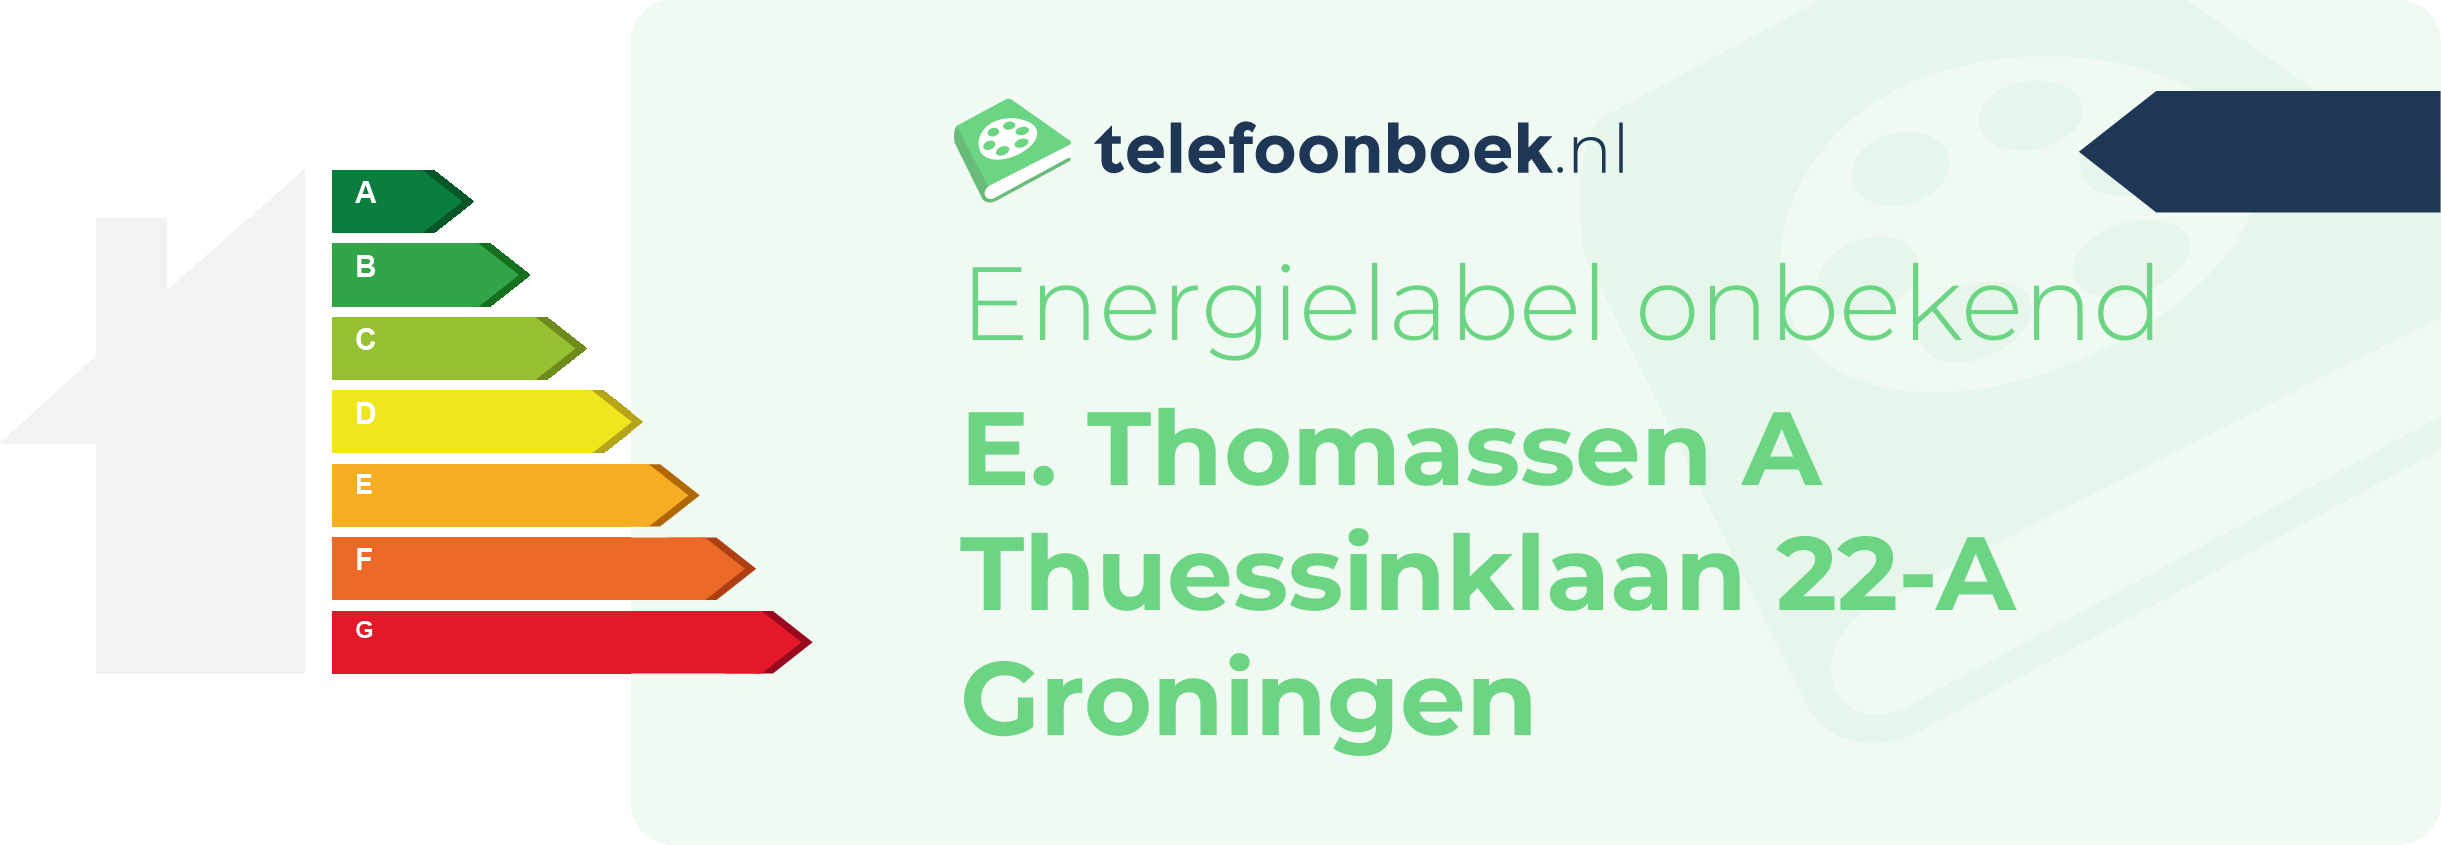 Energielabel E. Thomassen A Thuessinklaan 22-A Groningen